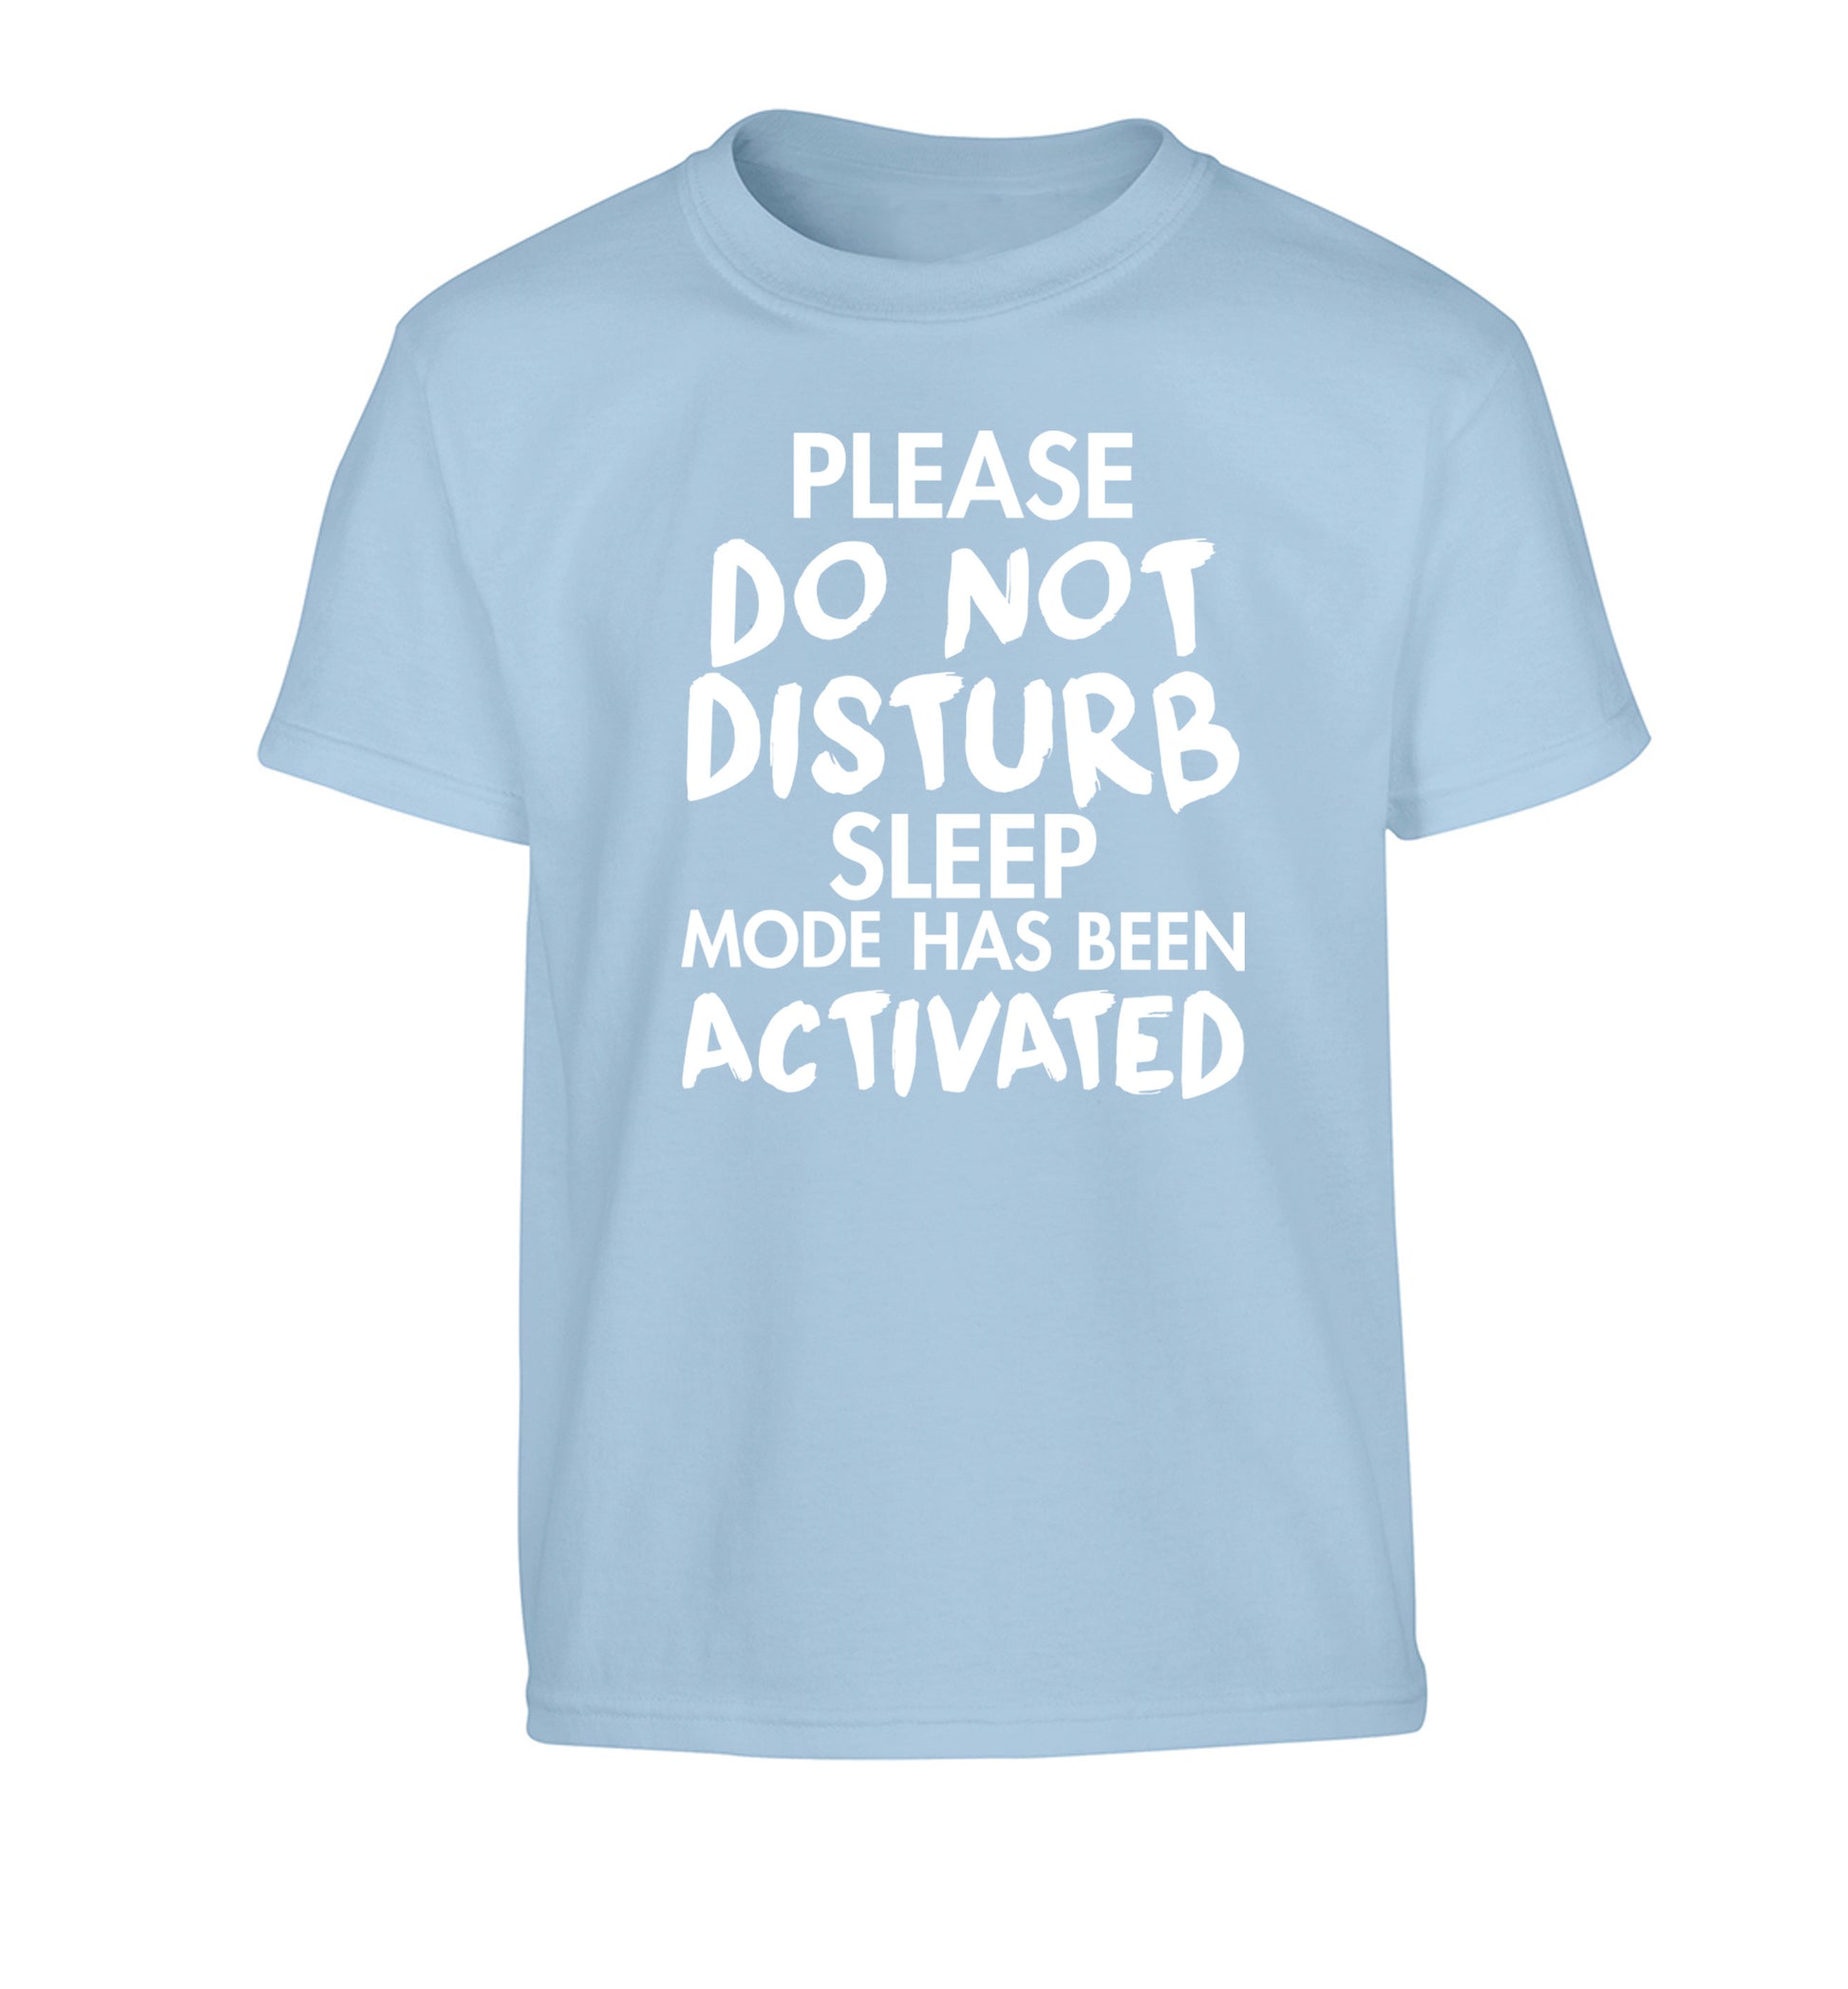 Please do not disturb sleeping mode has been activated Children's light blue Tshirt 12-14 Years